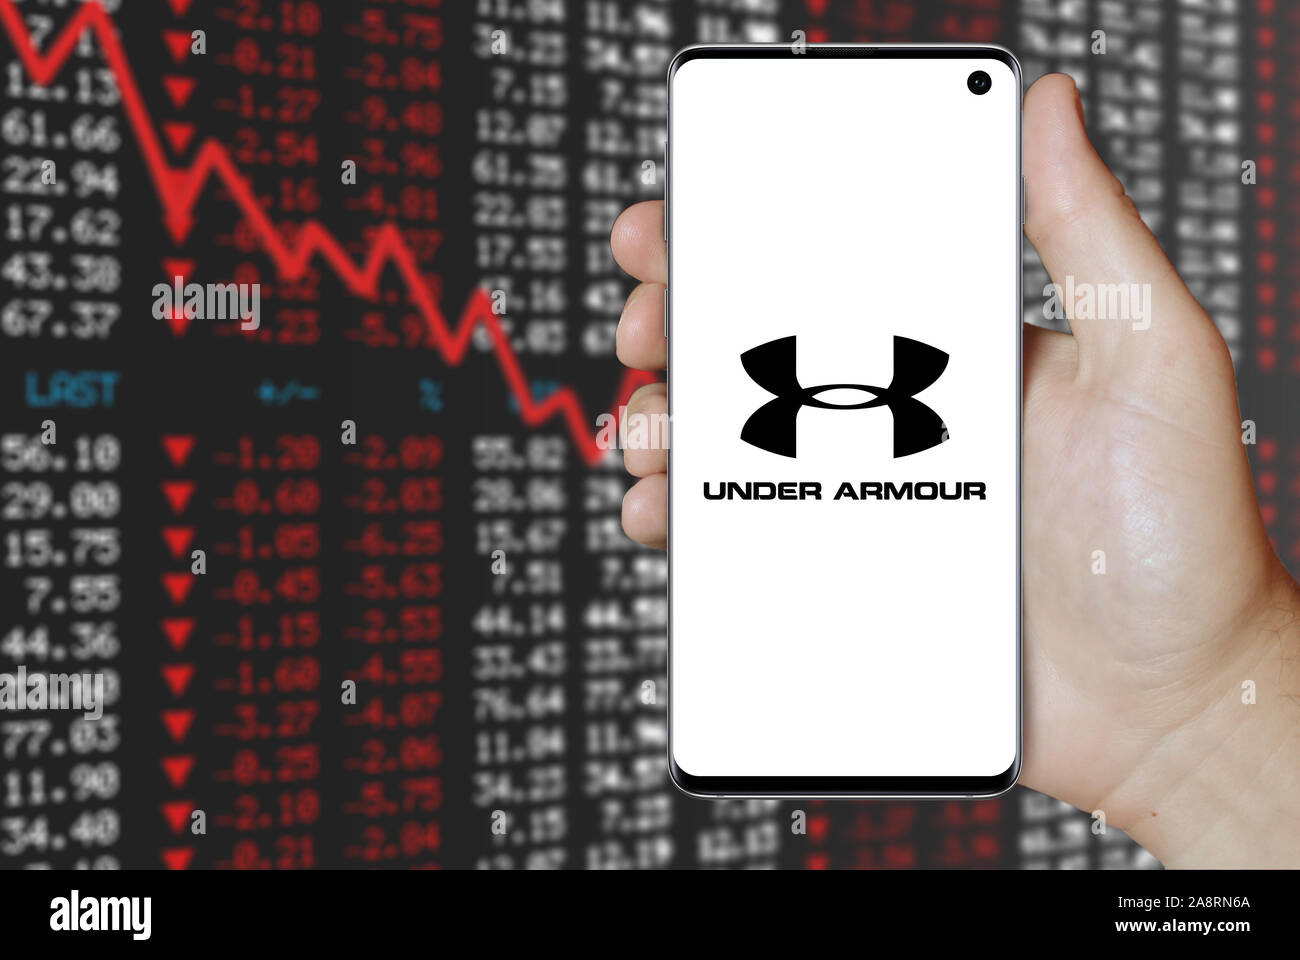 Logo of public company Under Armour displayed on a smartphone. Negative  stock market background. Credit: PIXDUCE Stock Photo - Alamy